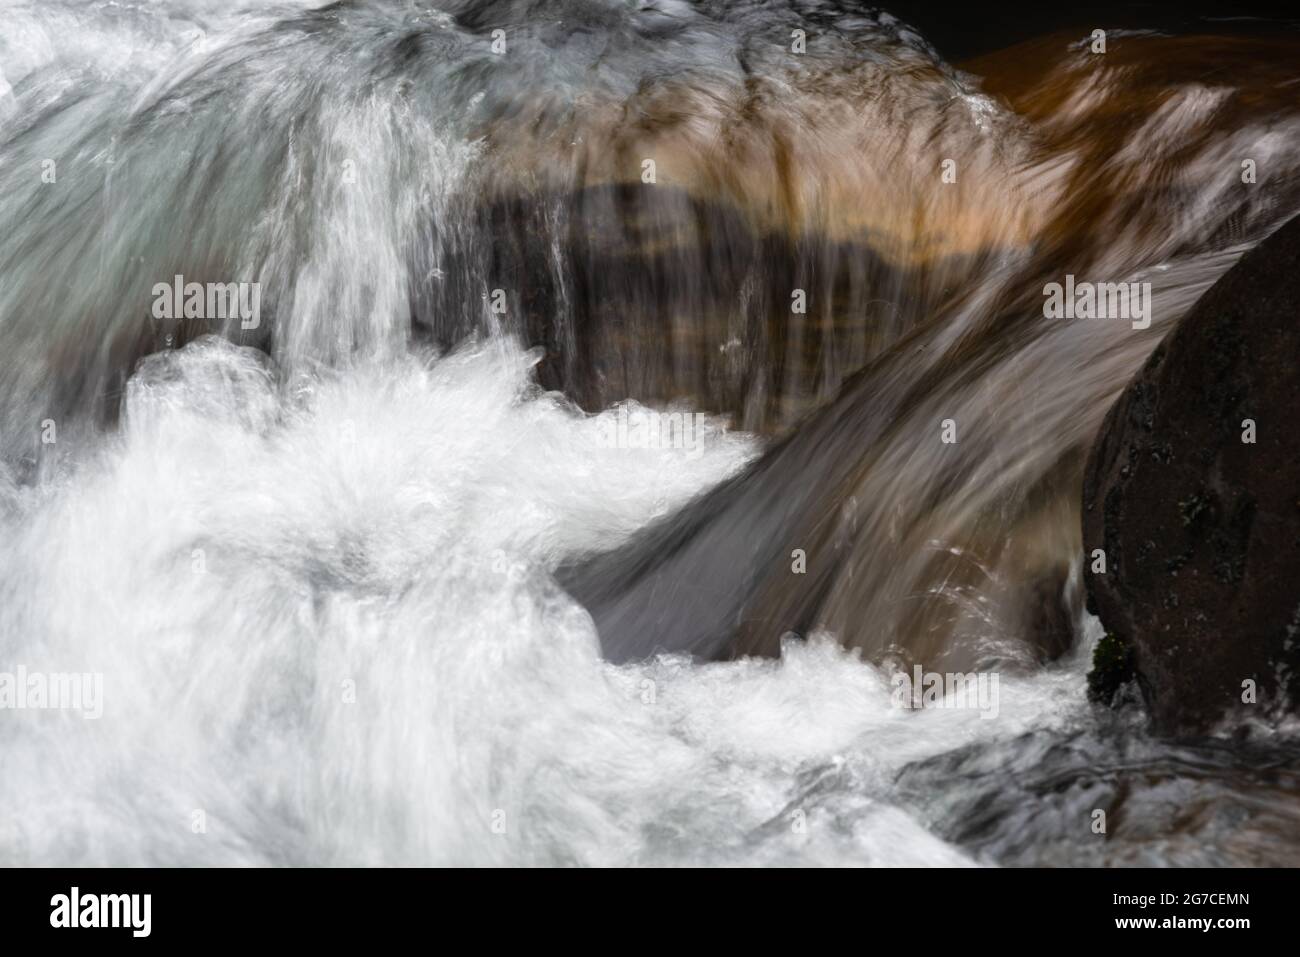 Tawhai waterfalls tumbling down and pounding the rocks, Tongariro National Park, New Zealand Stock Photo